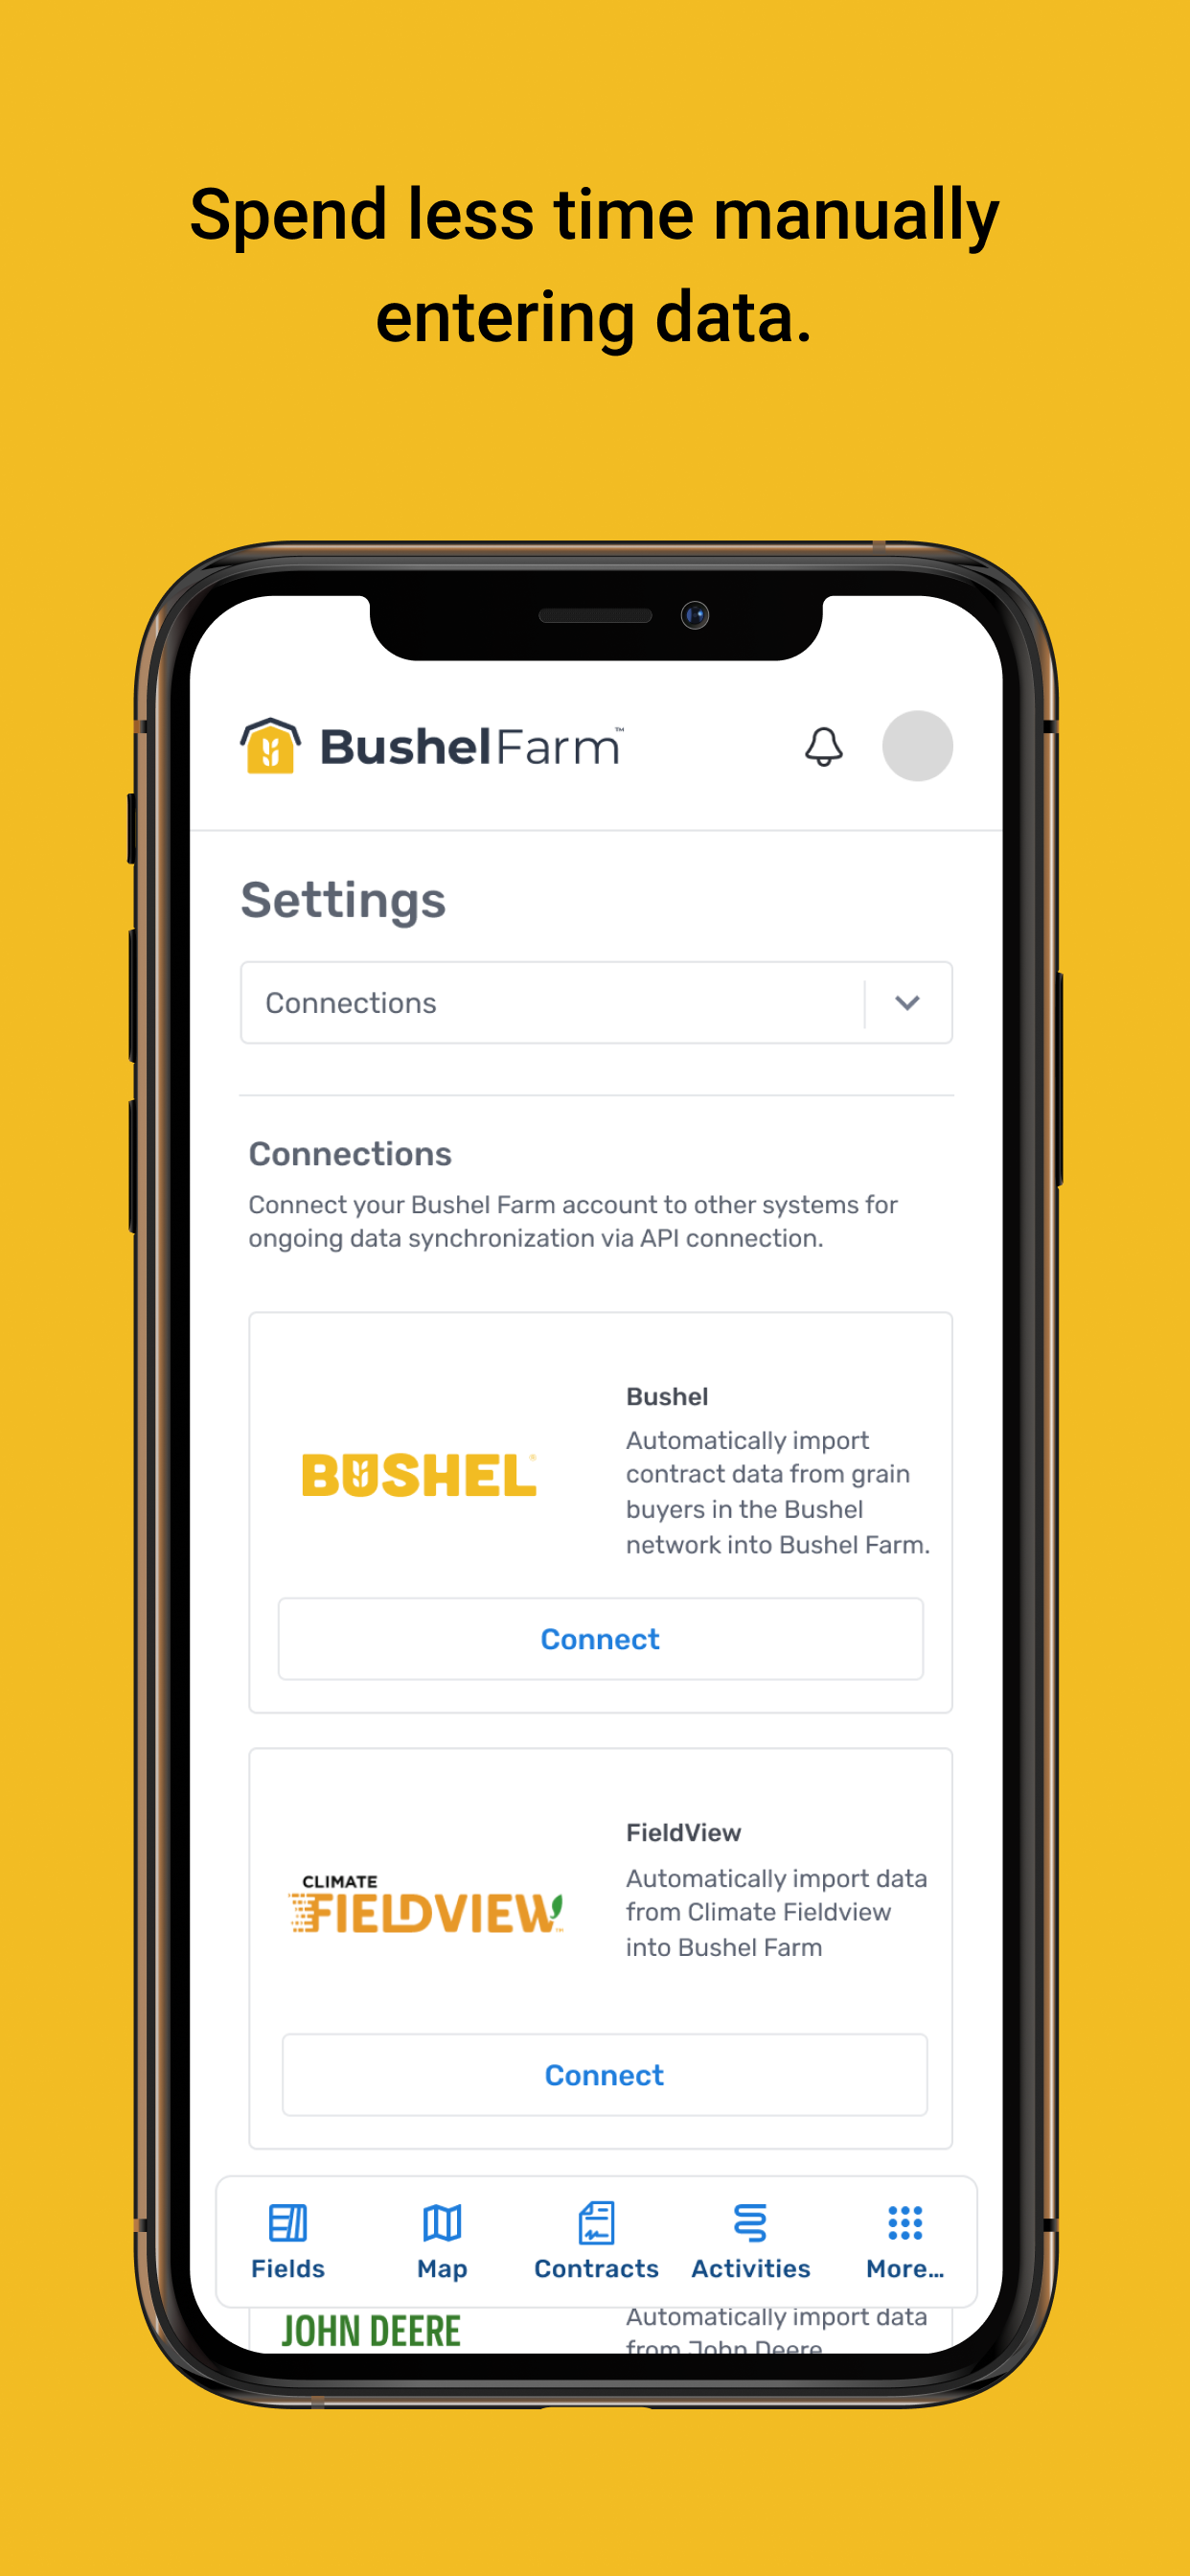 Bushel Farm Software - 4